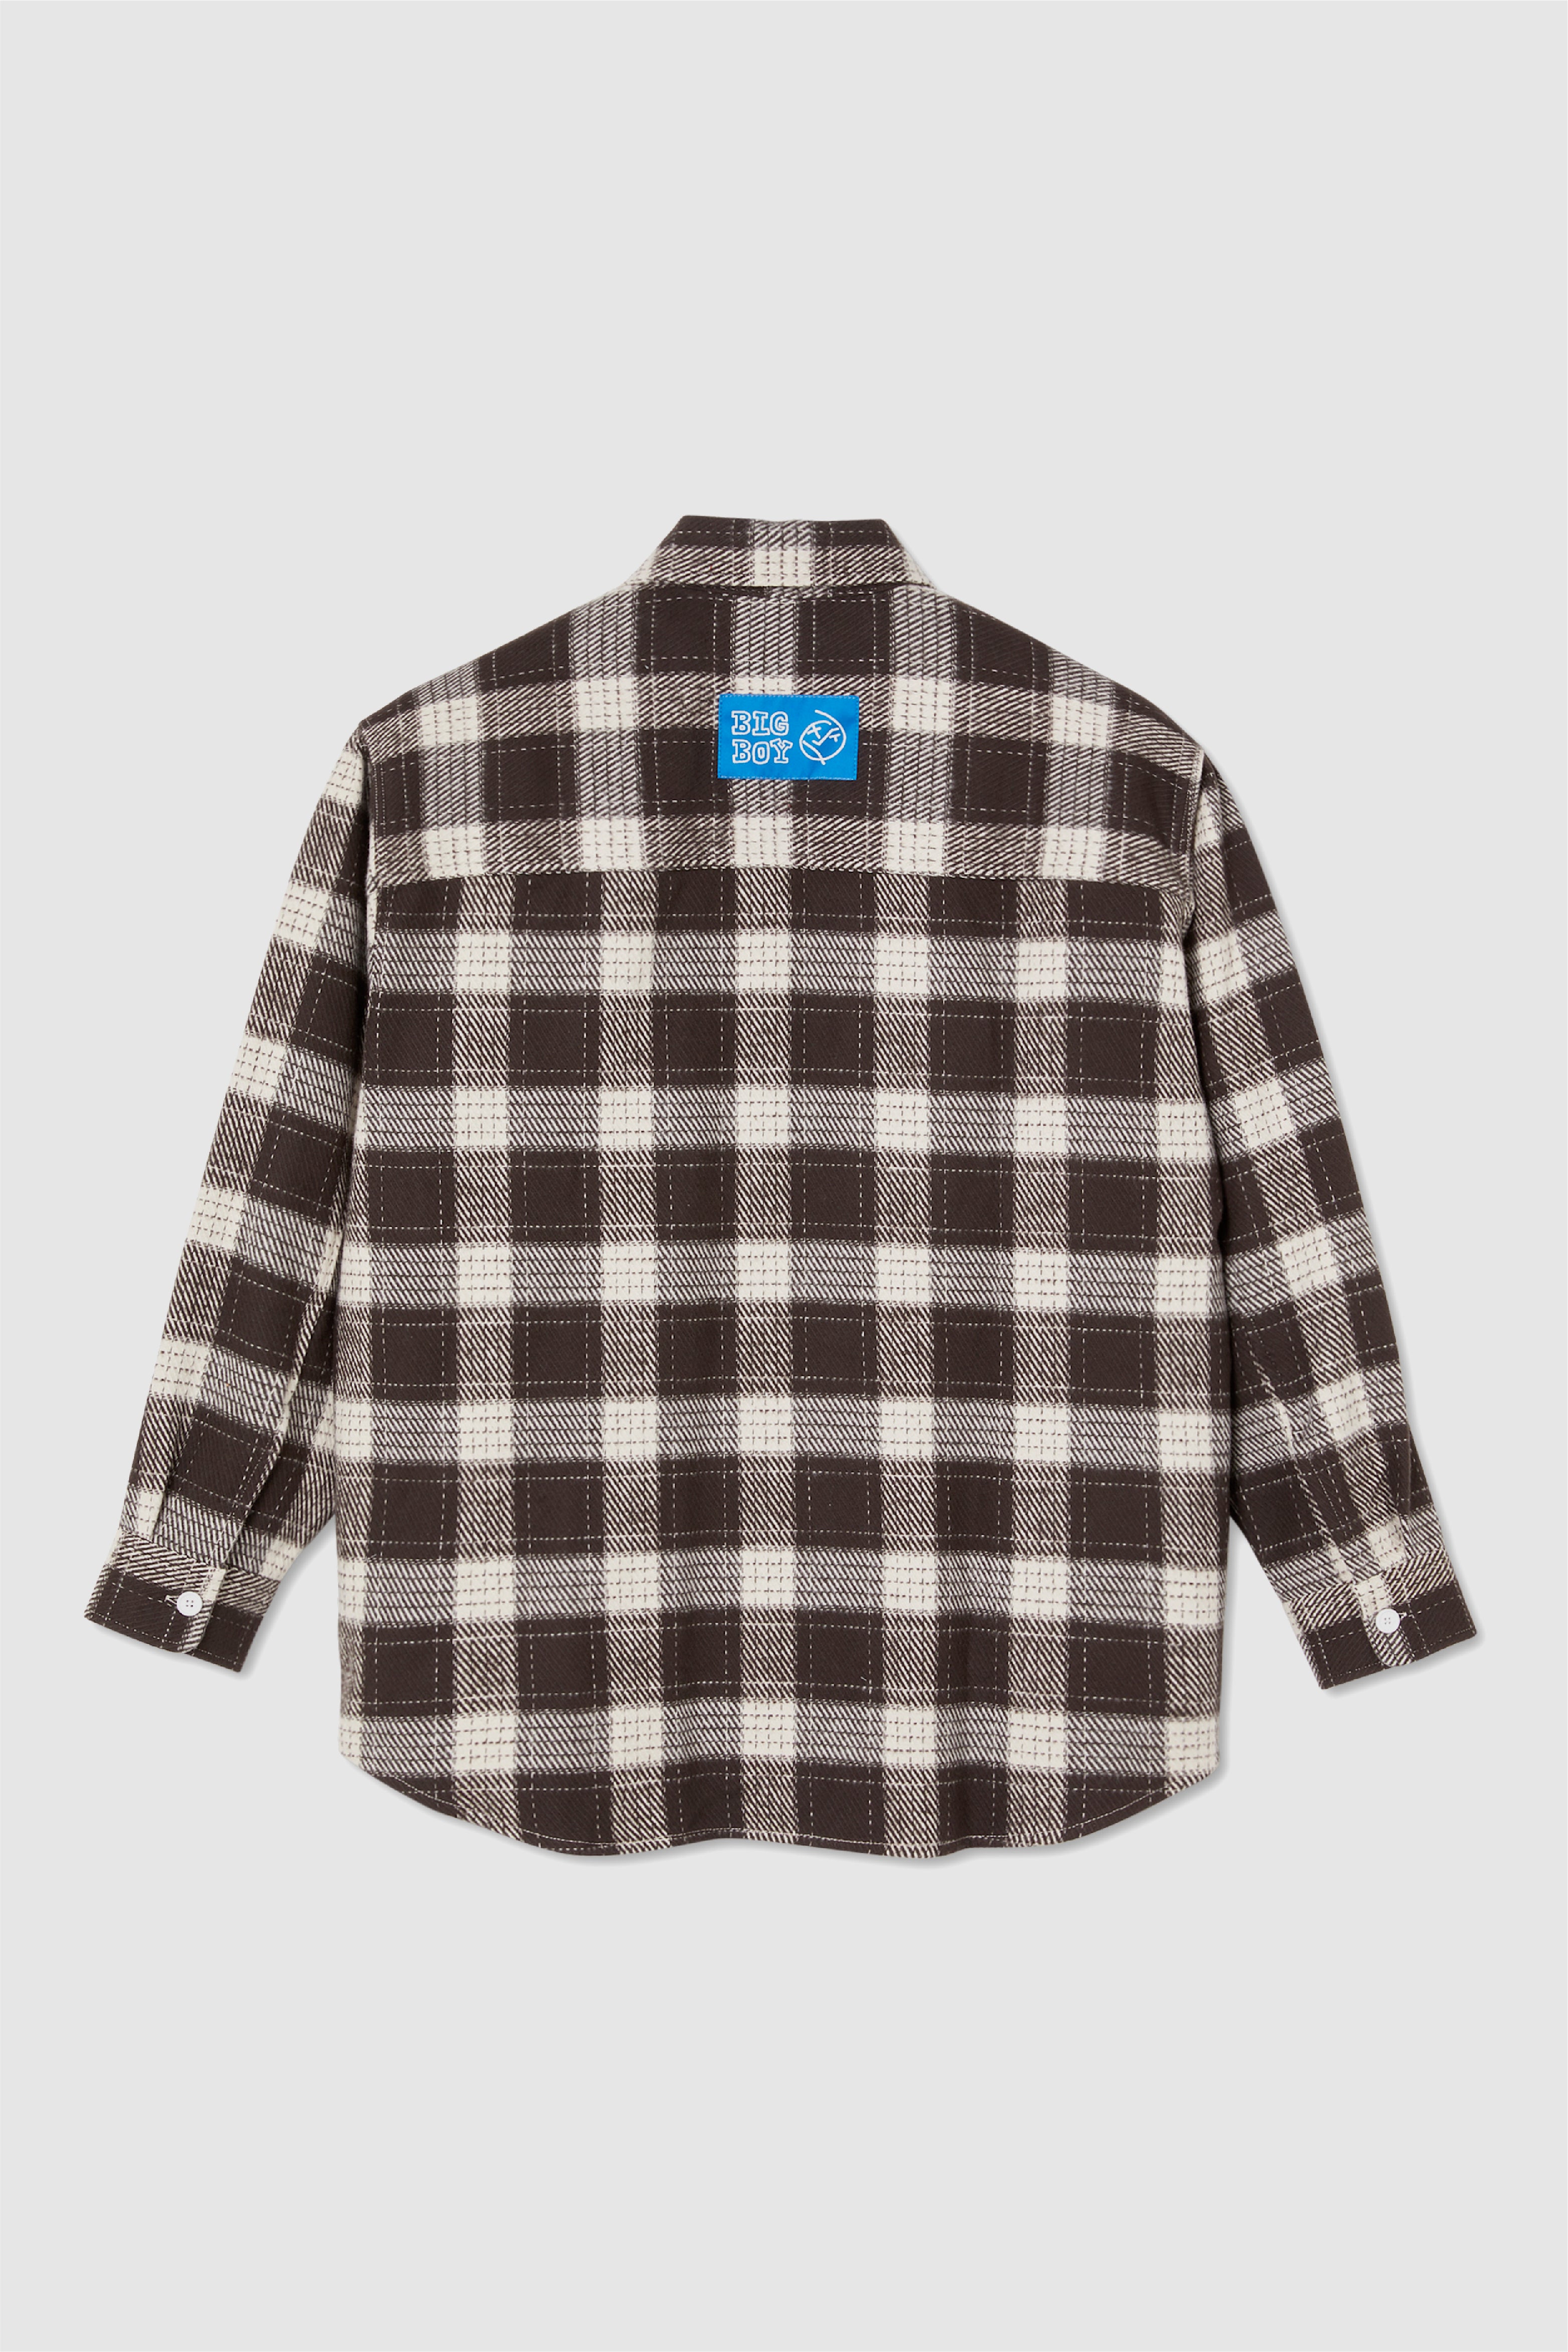 Selectshop FRAME - POLAR SKATE CO. Big Boy Flannel Shirt Shirts Dubai